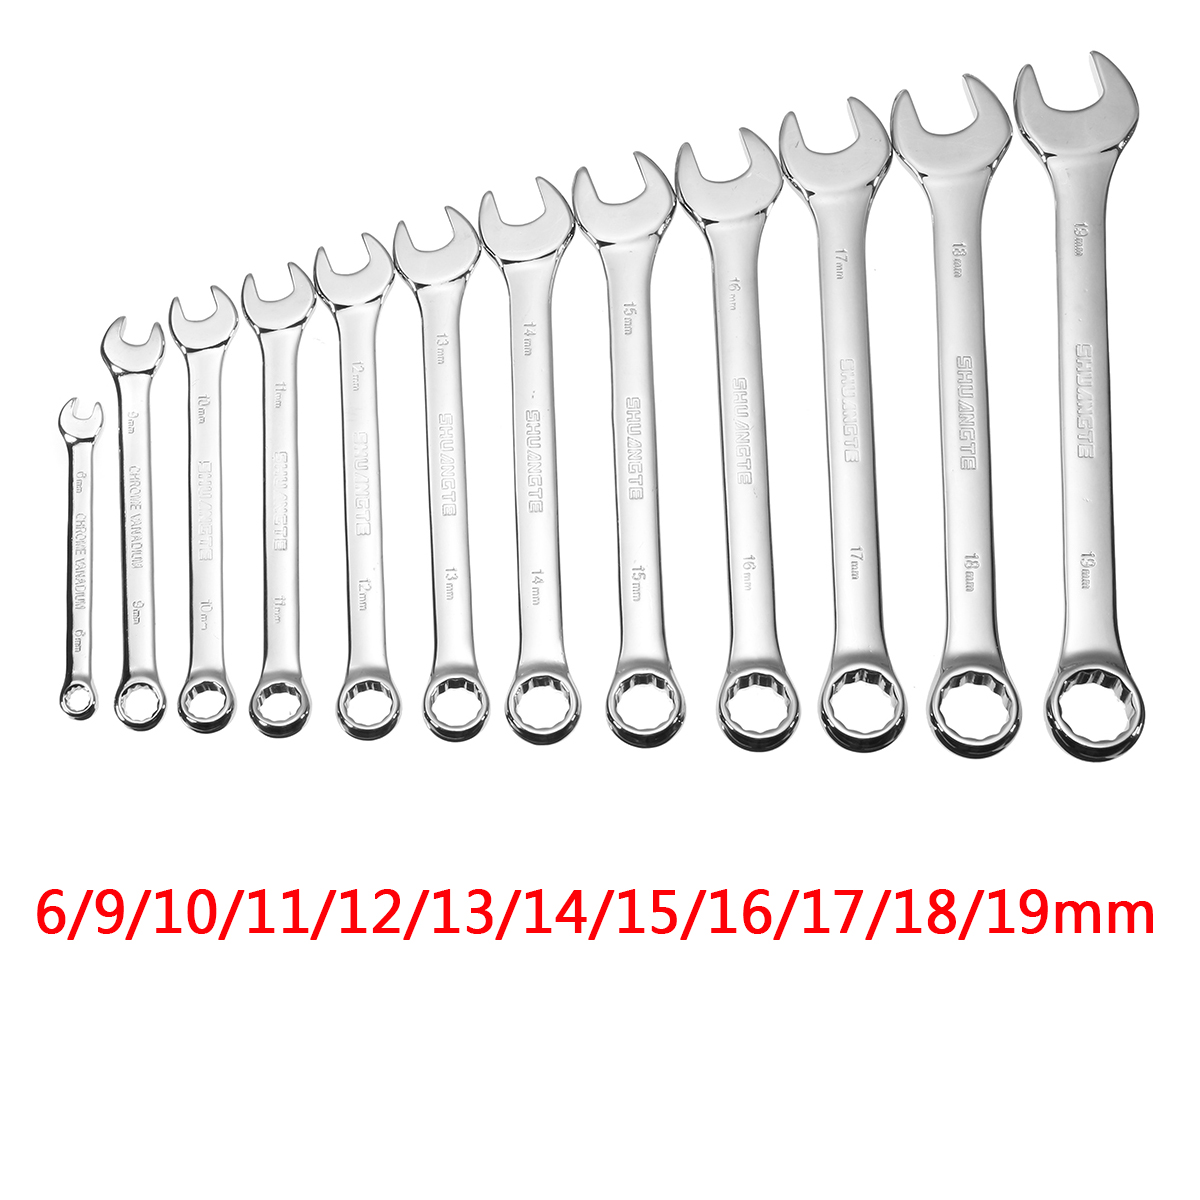 BiuZi 12Pcs/Box Flexible Head Chrome Vanadium Professional Combination Spanners Ratchet Wrench Tool Set 8-19mm Spanner Wrenches Kits 